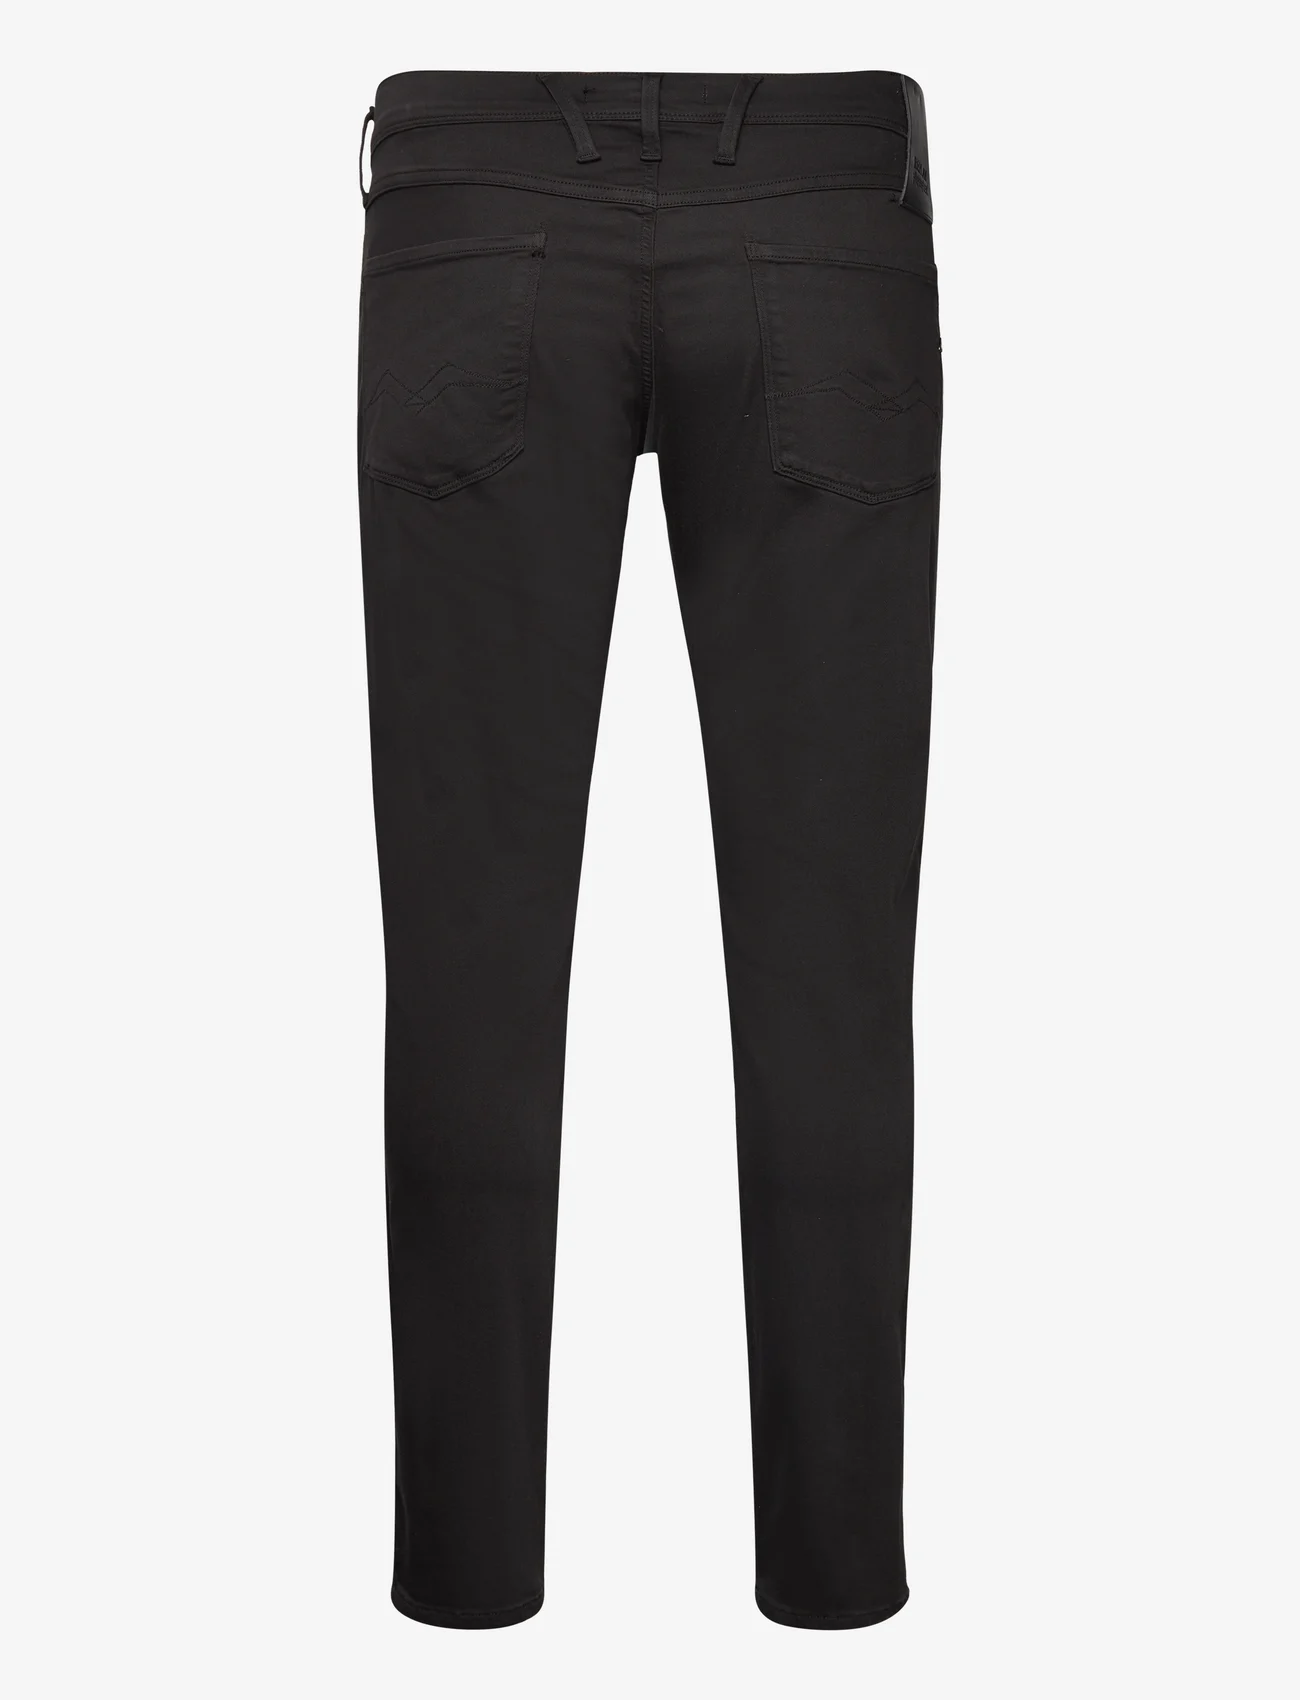 Replay - ANBASS Trousers Hyperflex Colour XLite - slim fit jeans - black - 1